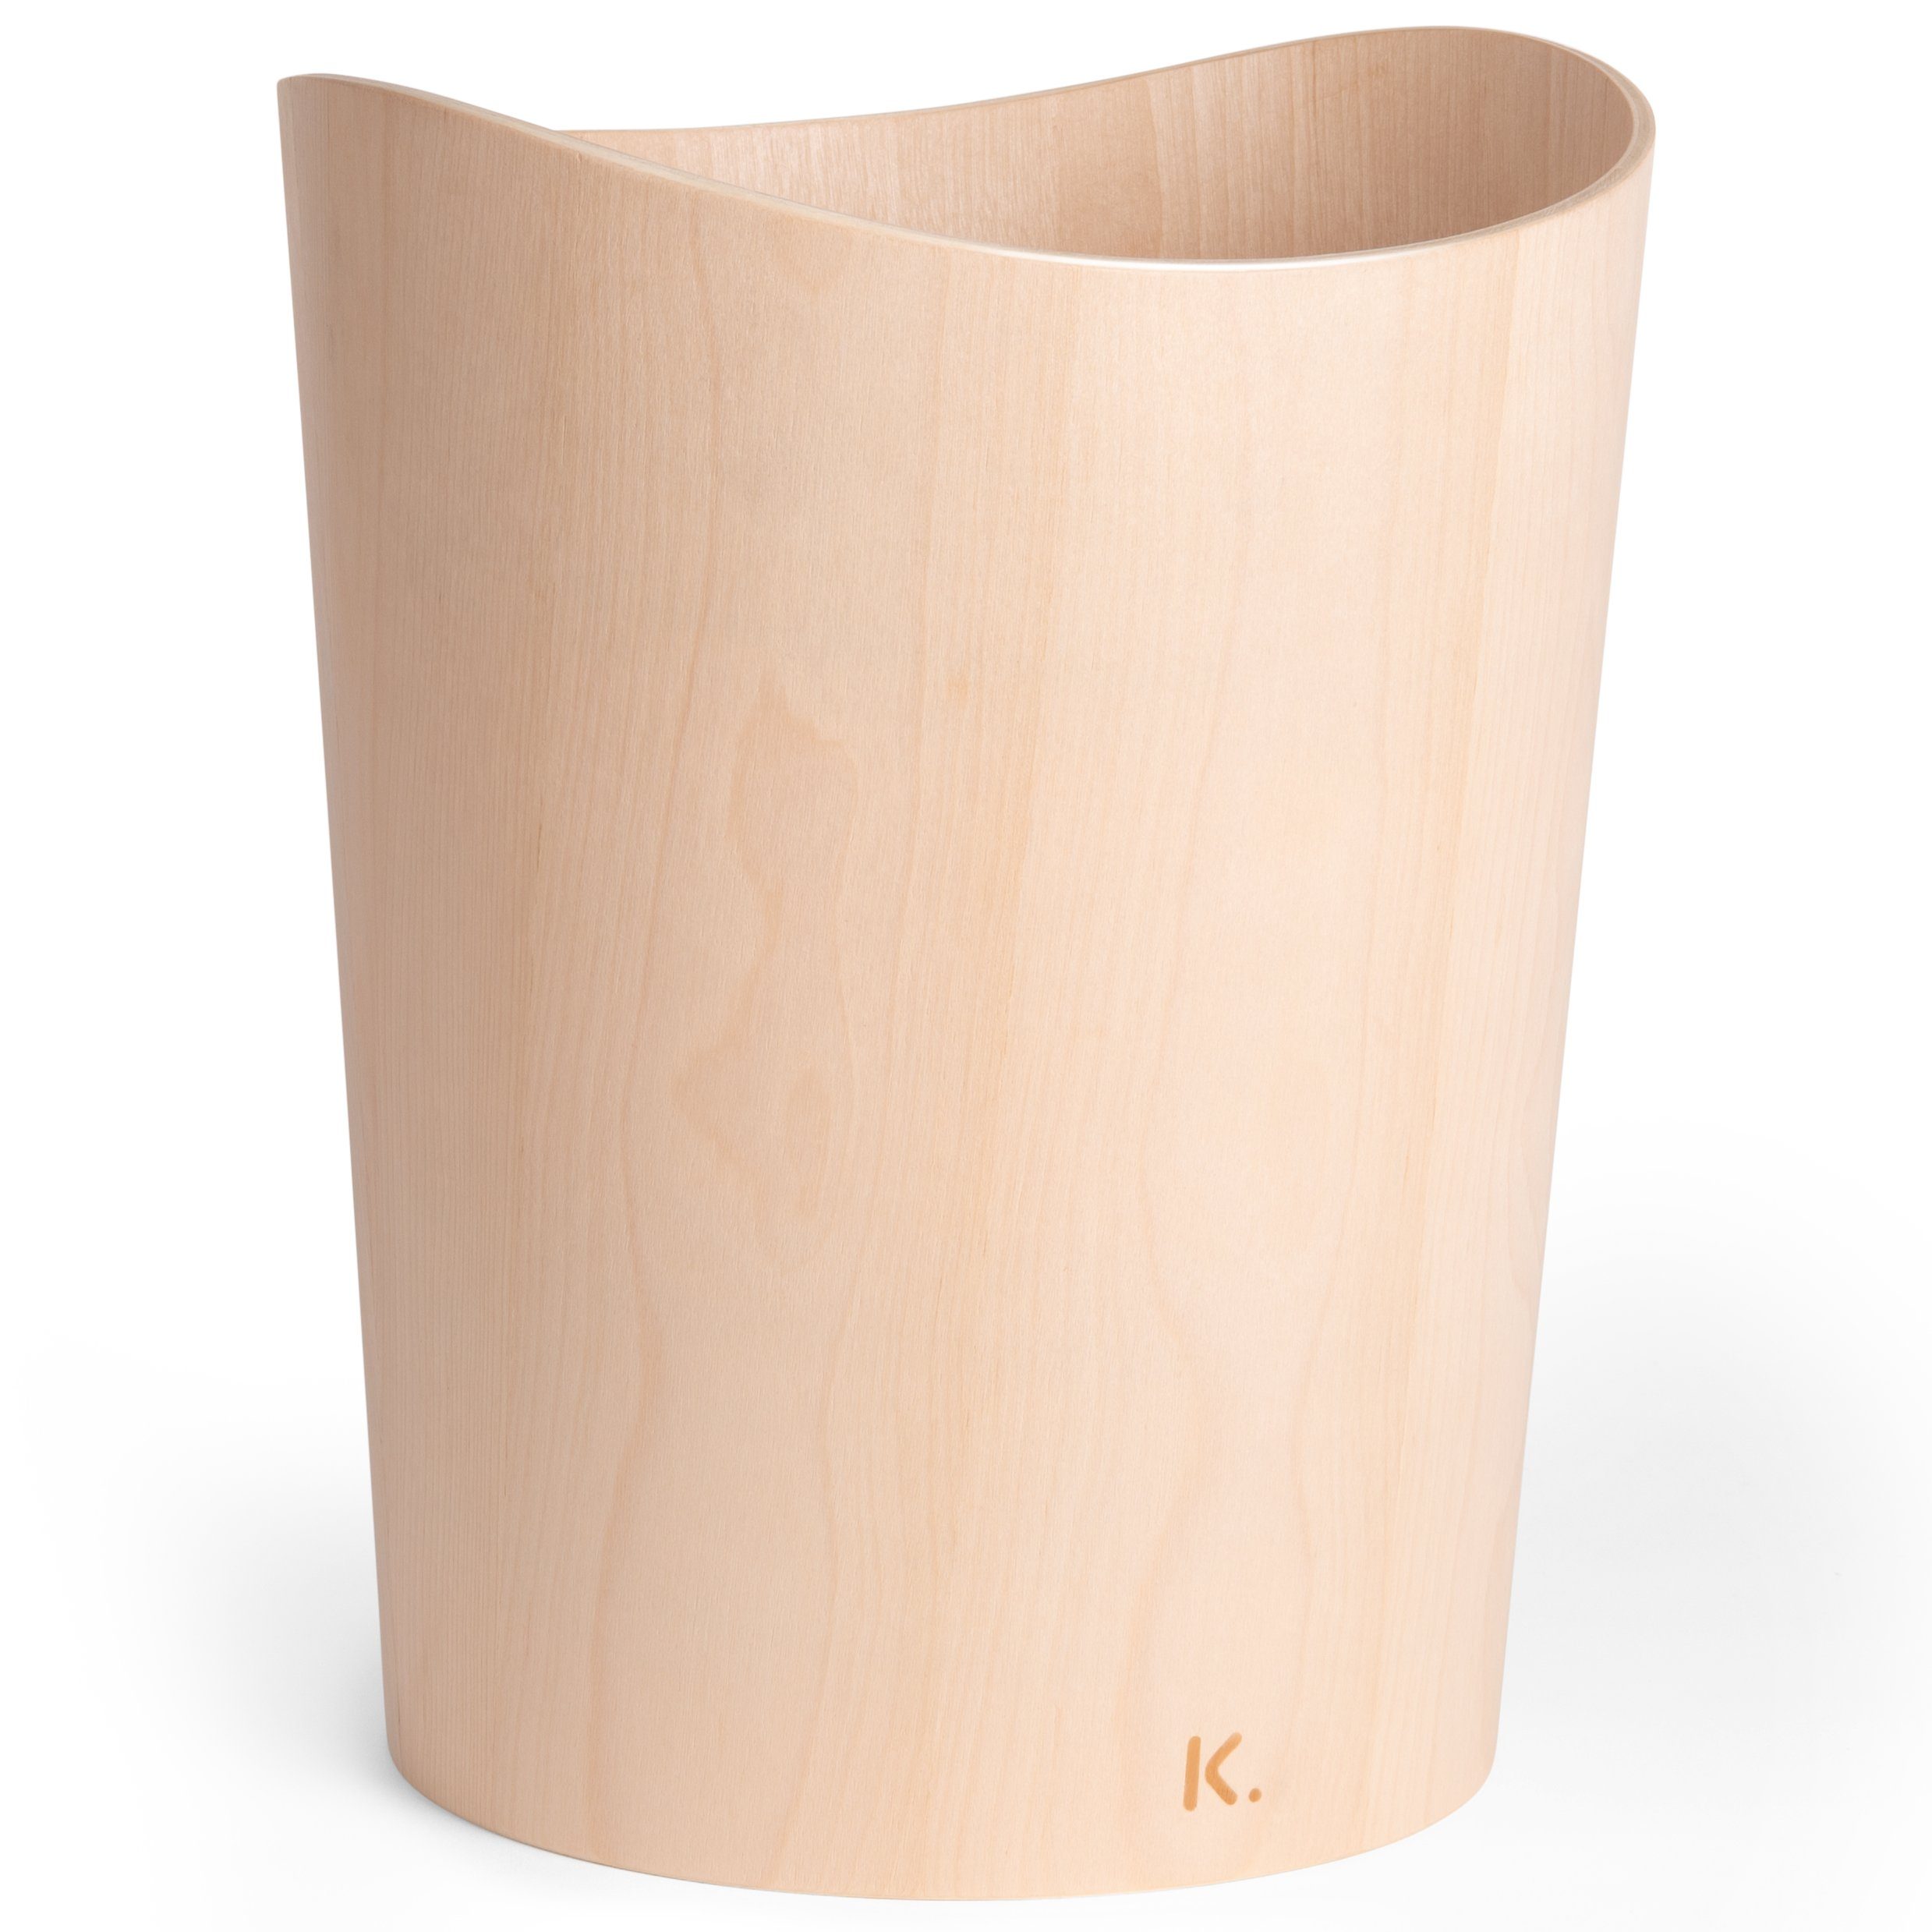 KAZAI. Papierkorb Echtholz-Veneer, Design Papierkorb mit massivem Holzkern und Echtholz-Veneer